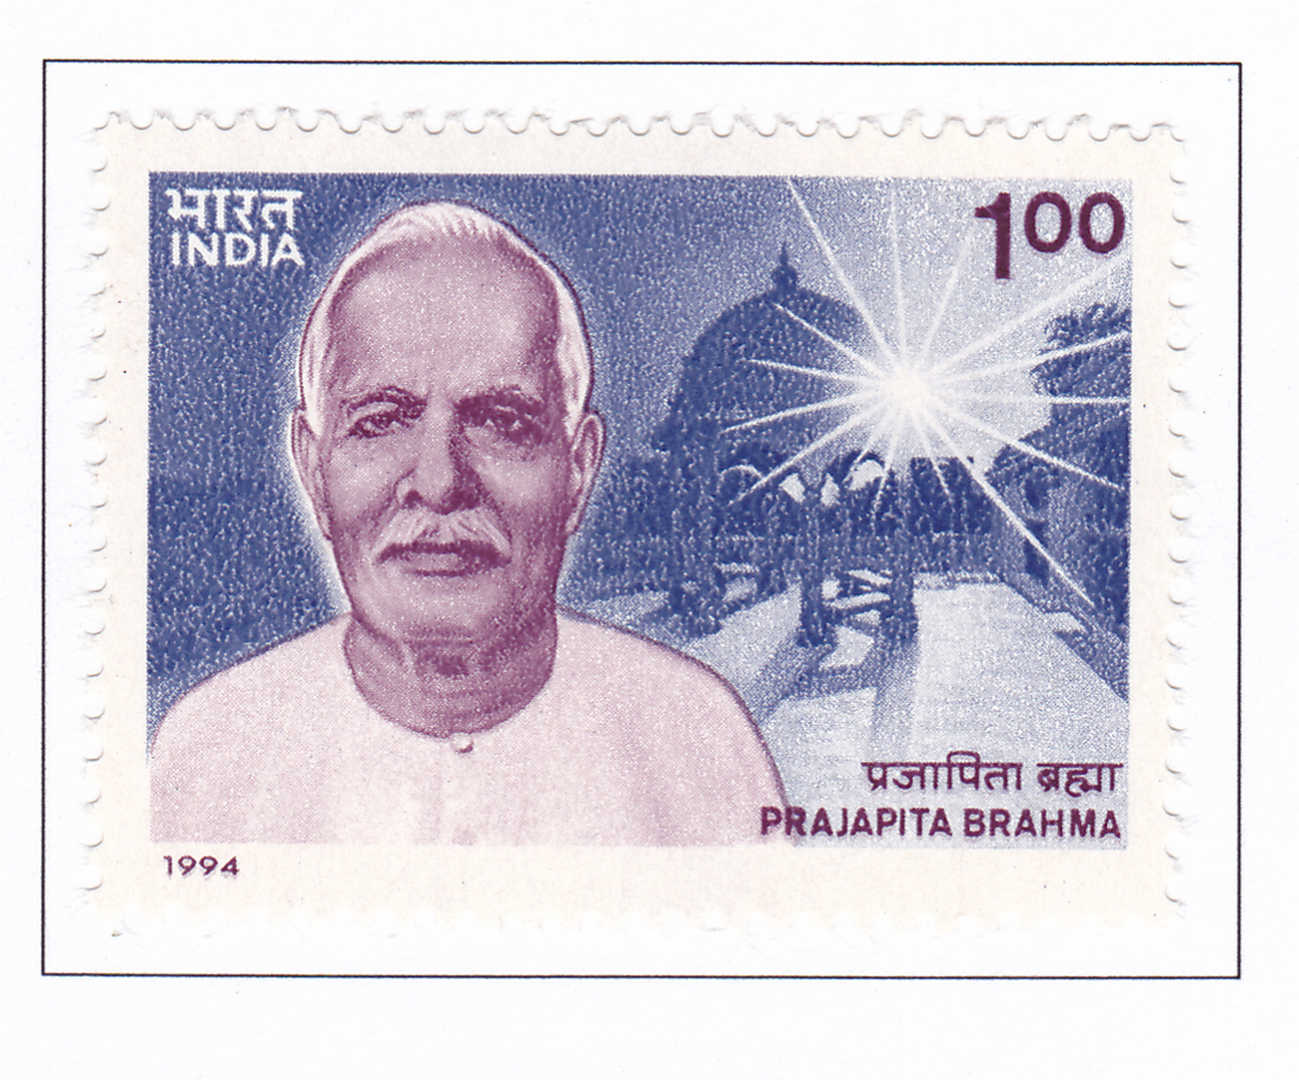 Brahma baba's stamp